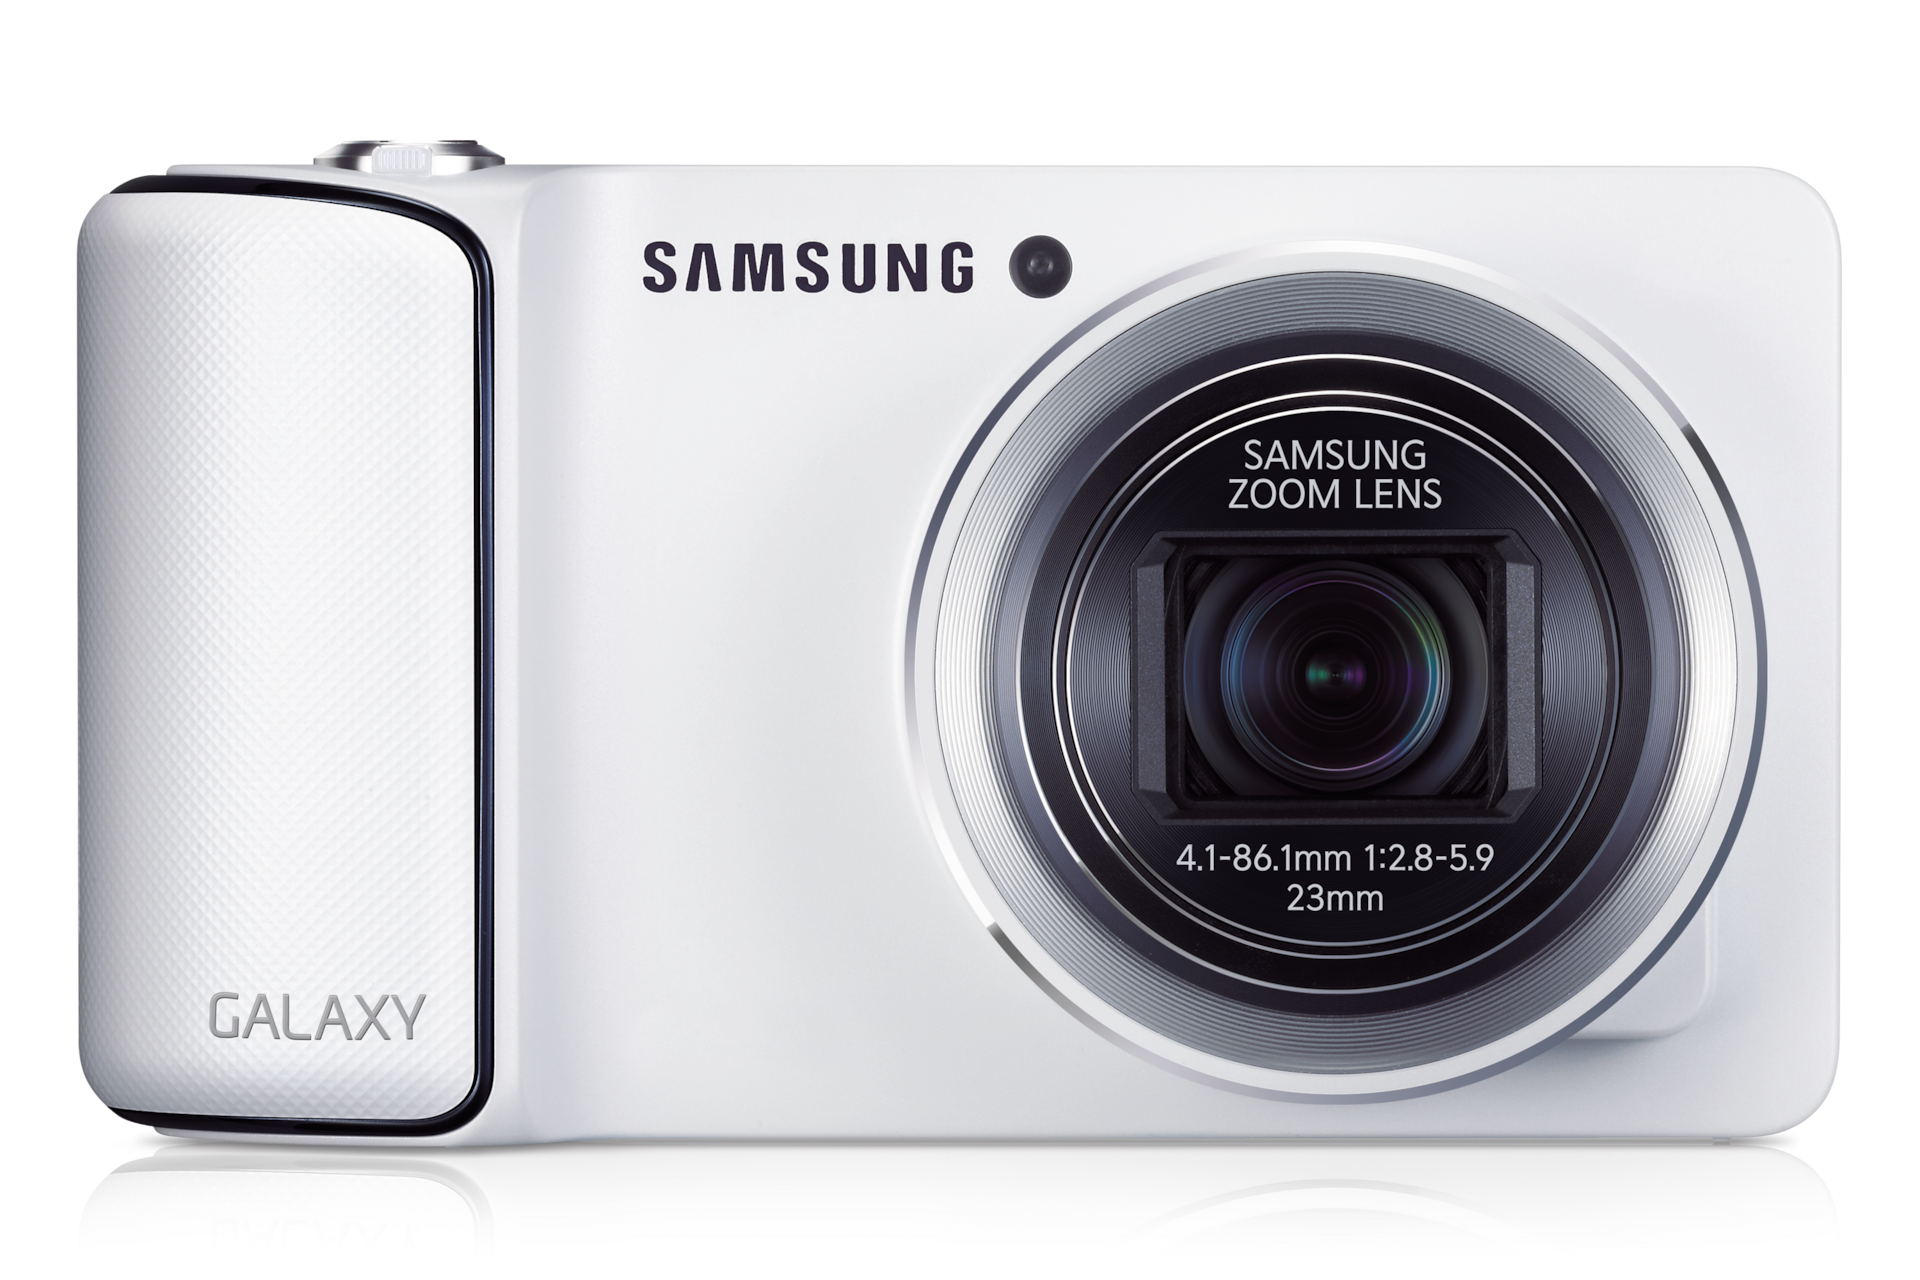 Samsung Galaxy Camera Ek-gc100 Software Download For Mac